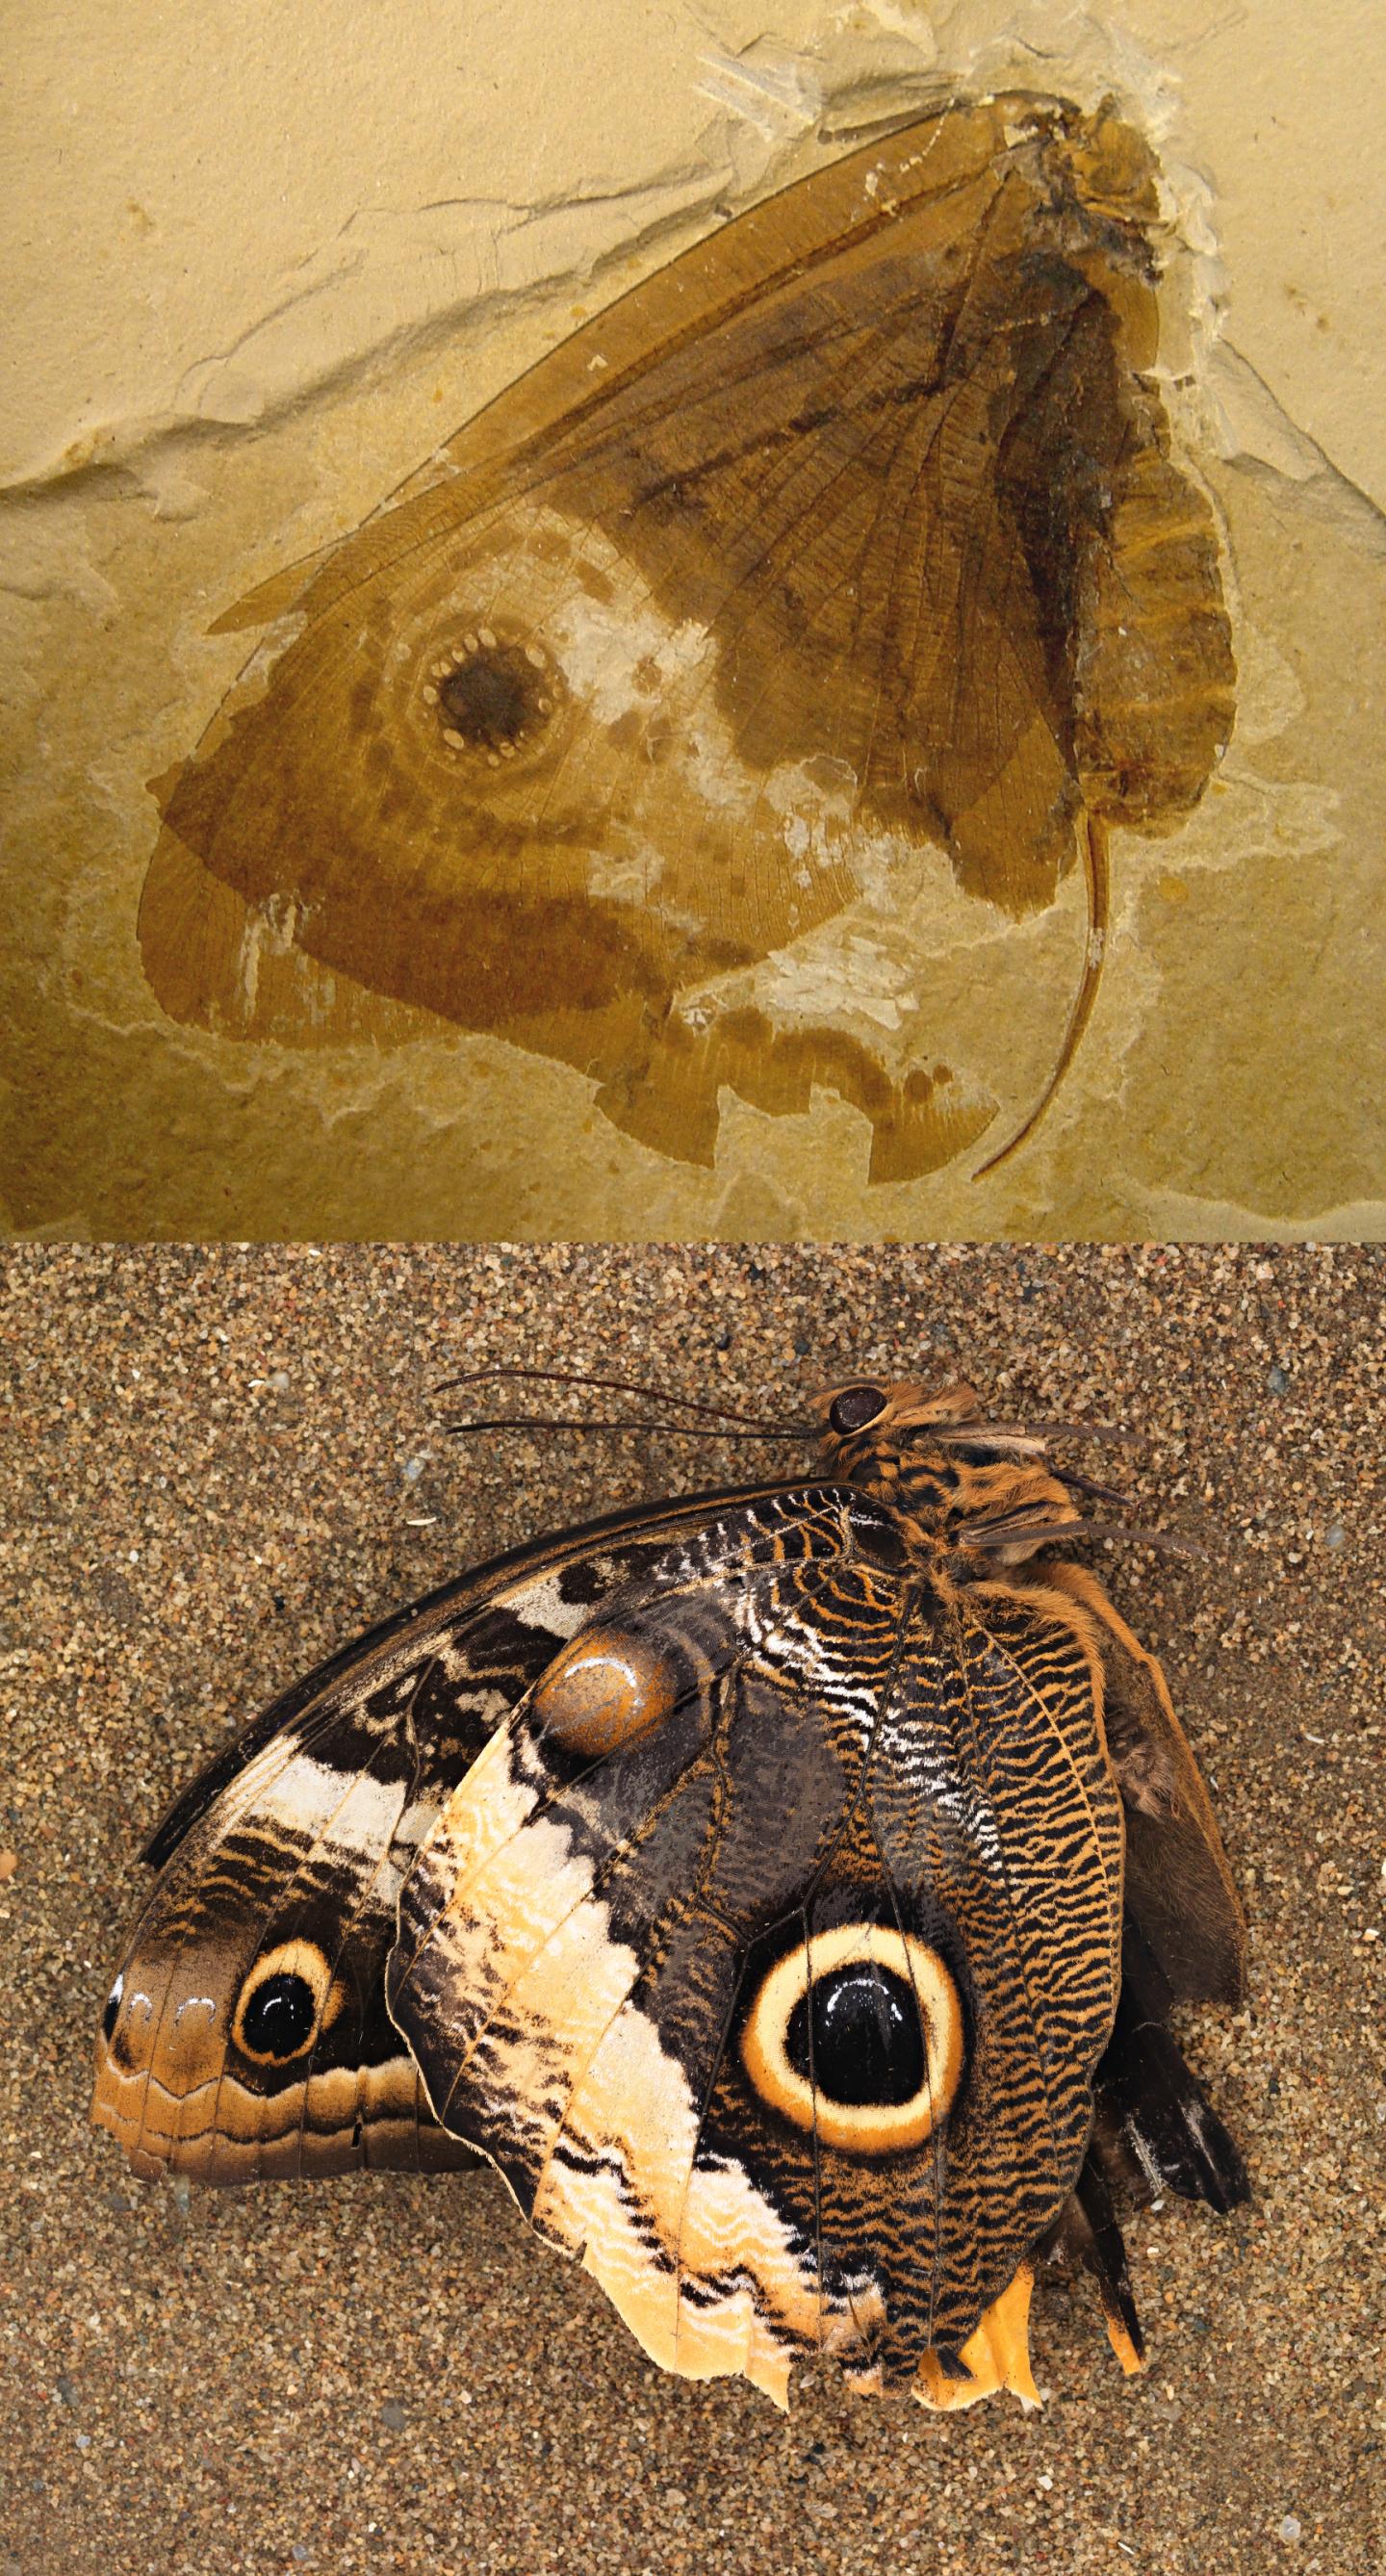 Evolution: Fossils reveal butterflies' history